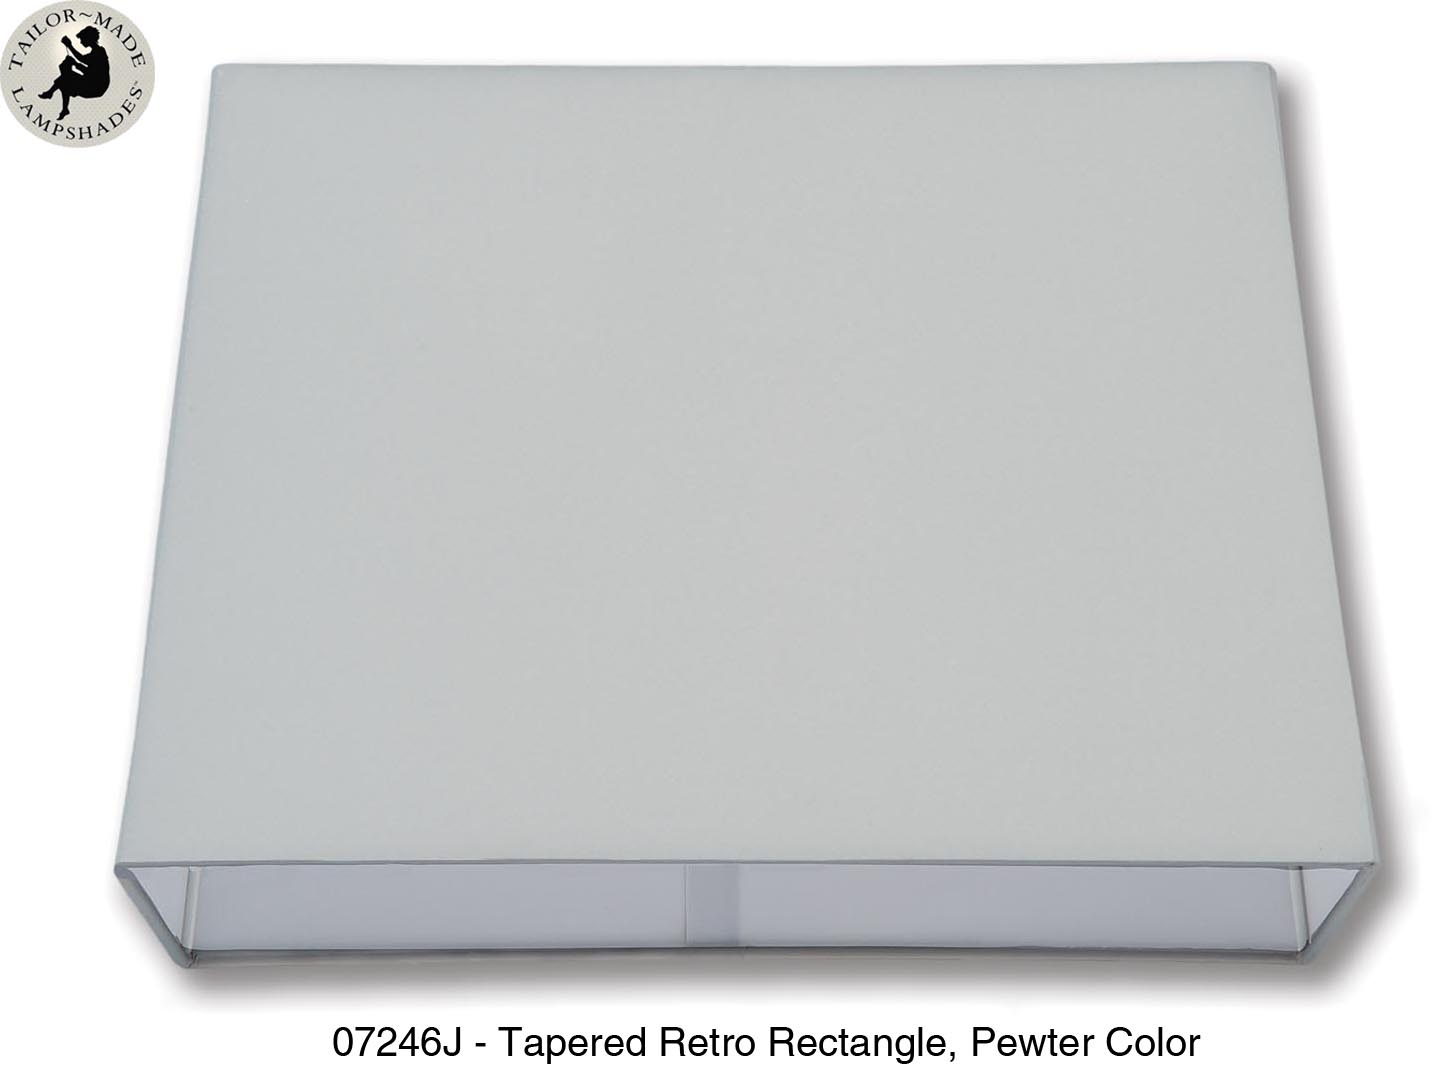 Tapered Retro Rectangle Hardback Shades - Dove Grey Color, Microfiber Chiffon